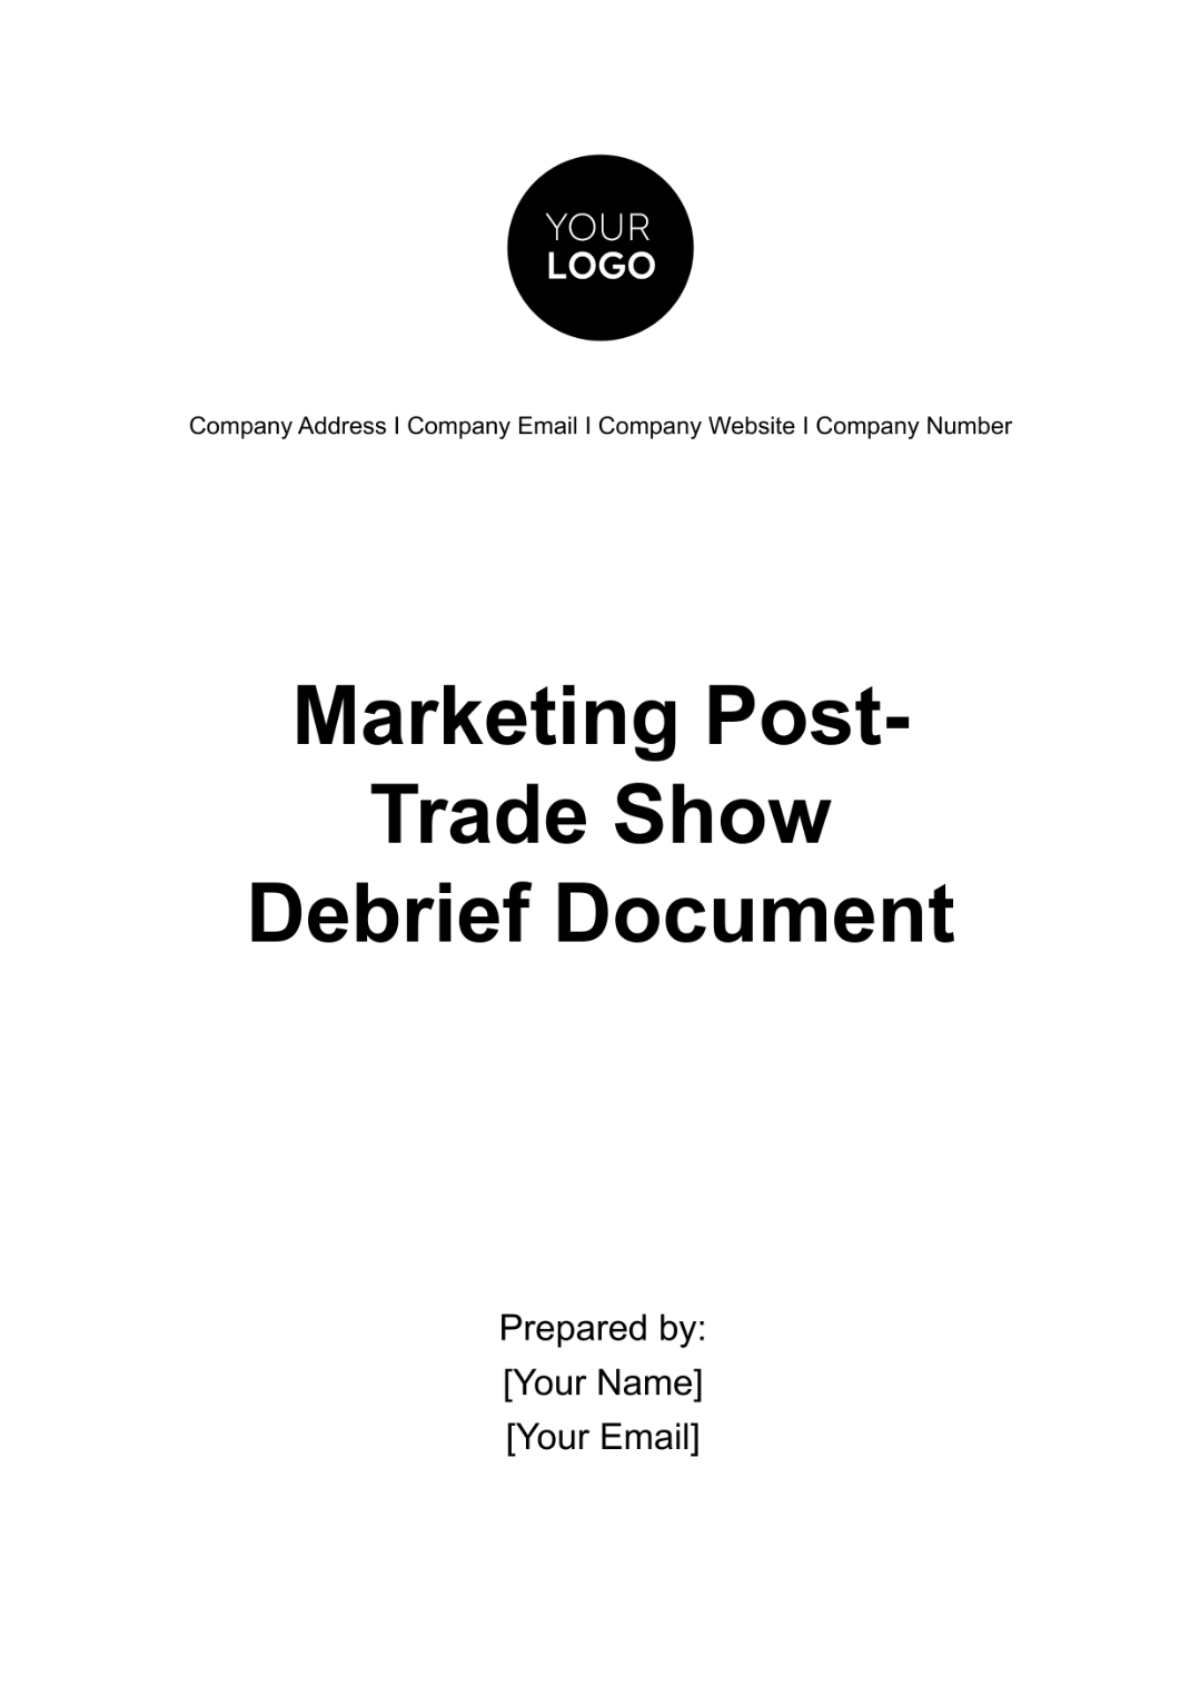 Marketing Post-Trade Show Debrief Document Template